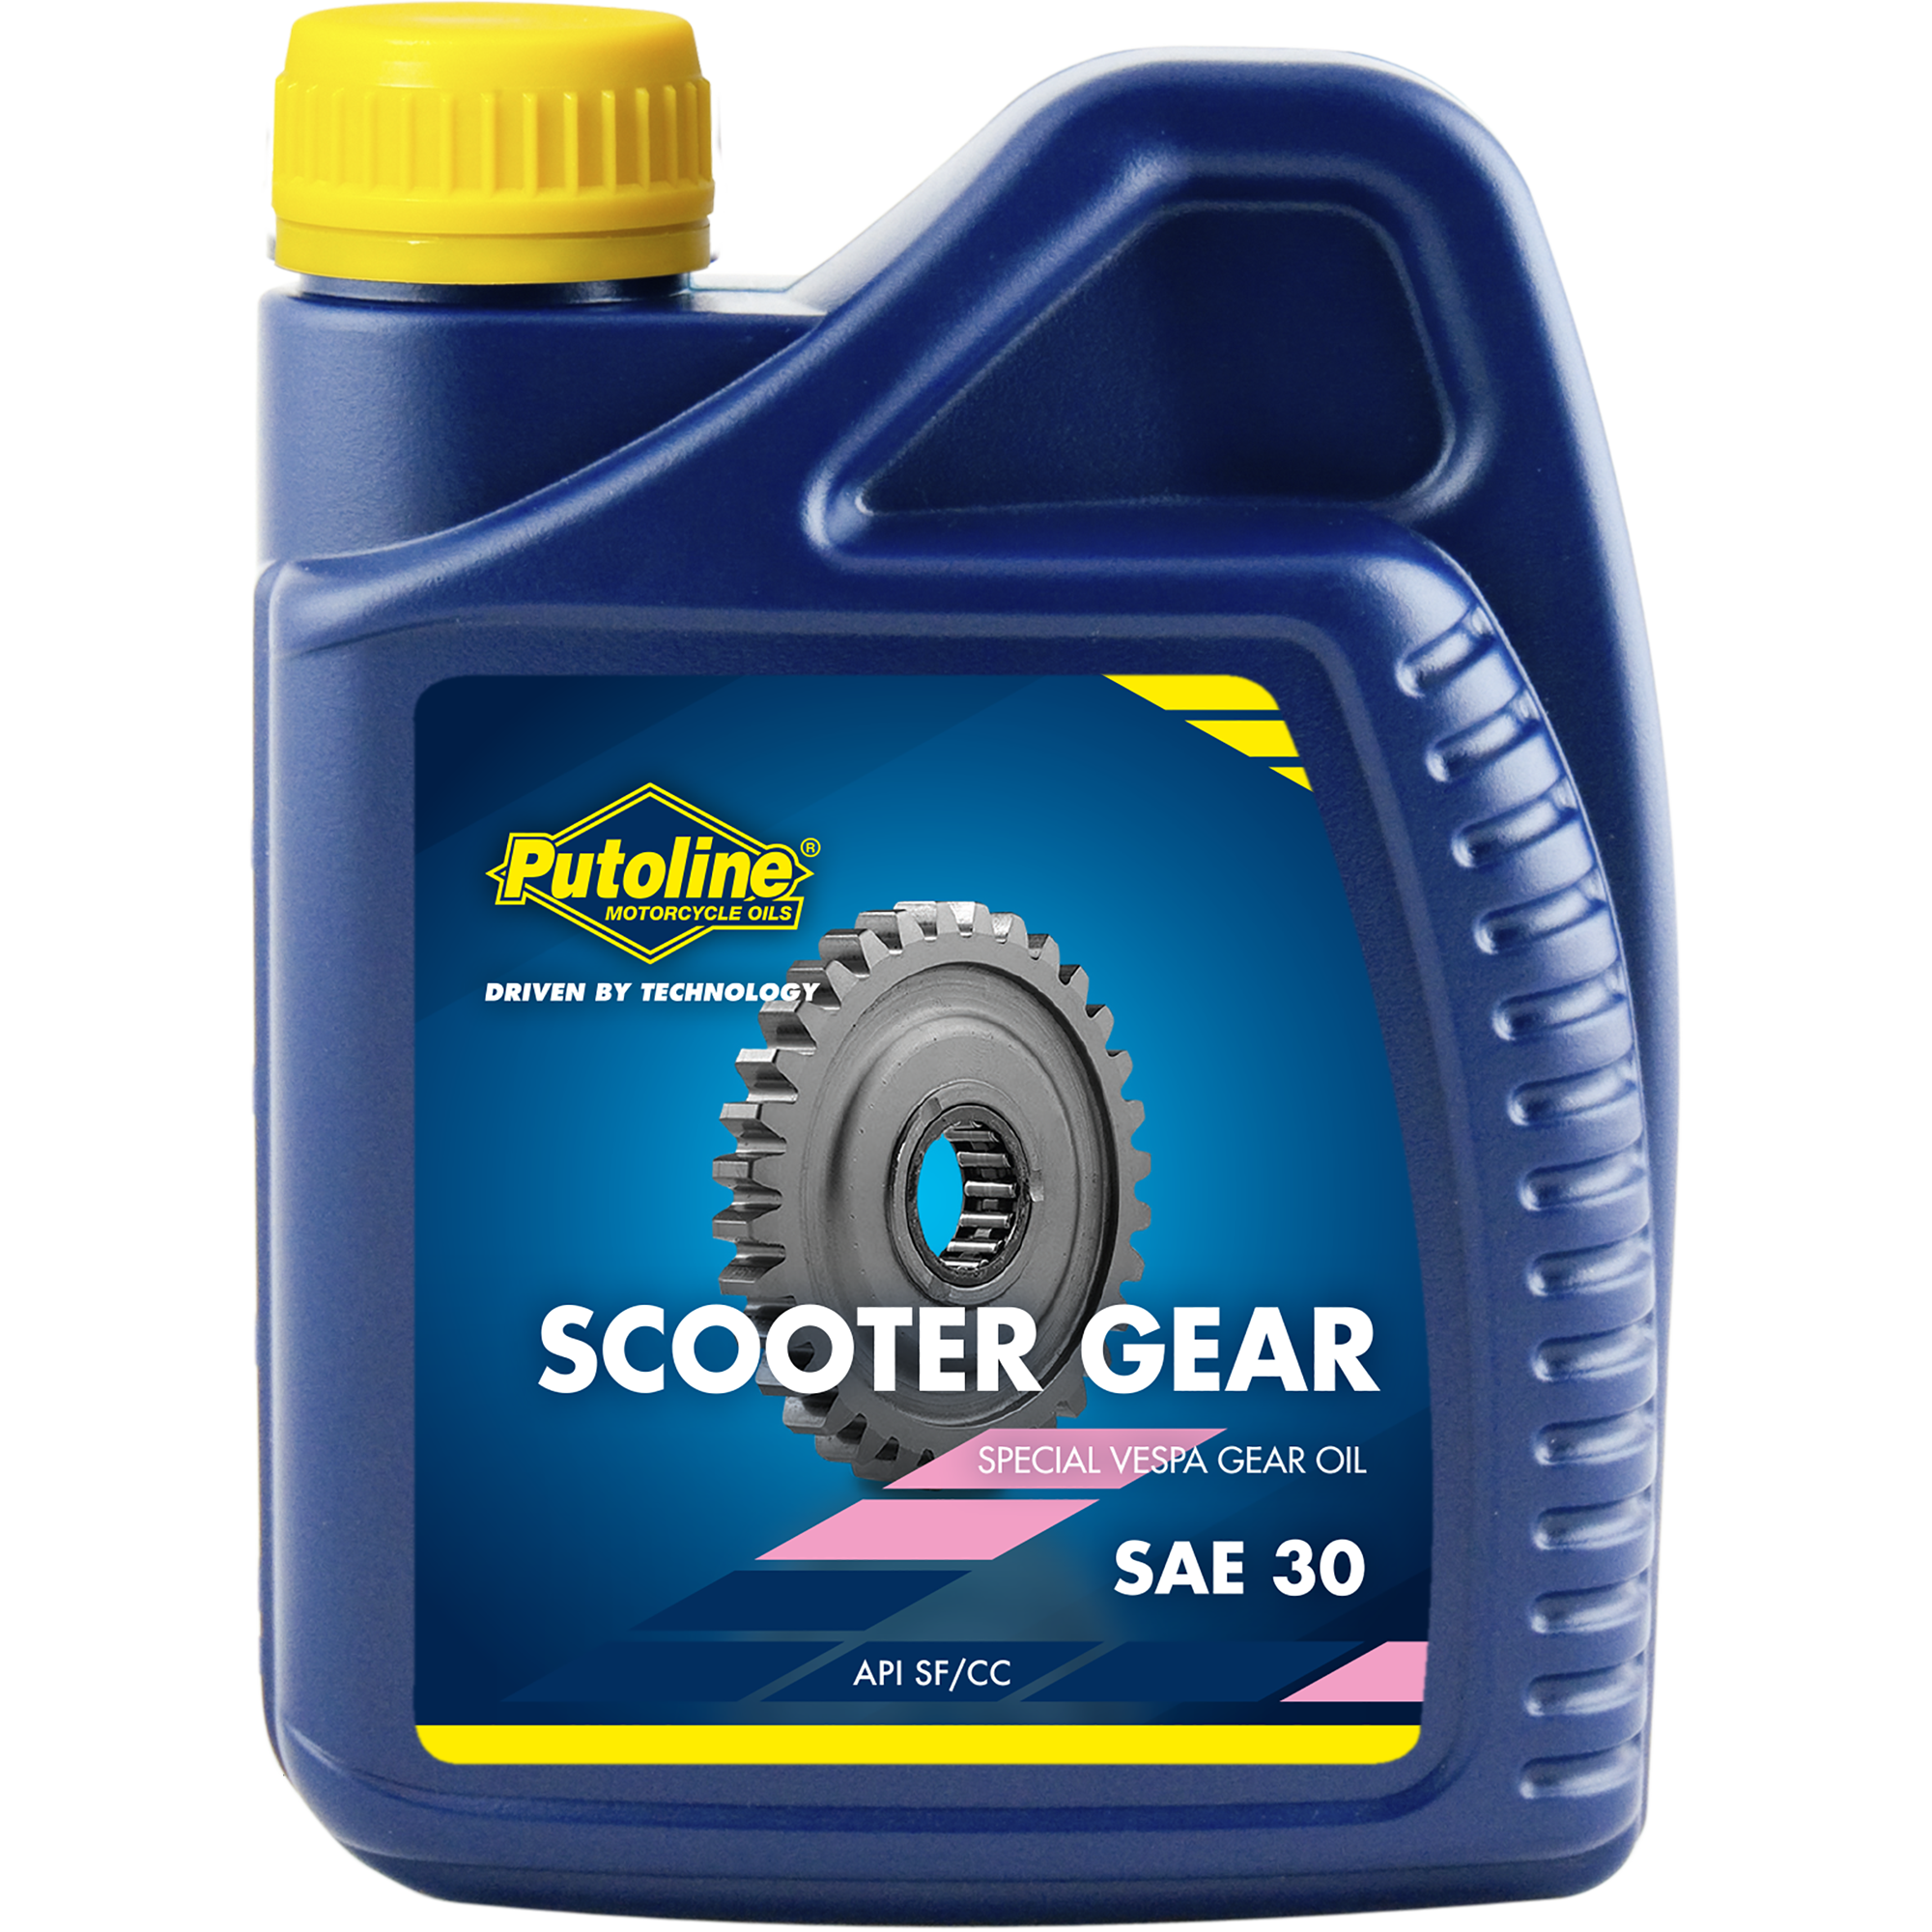 Putoline Scooter Gear Oil 30, 500 ml